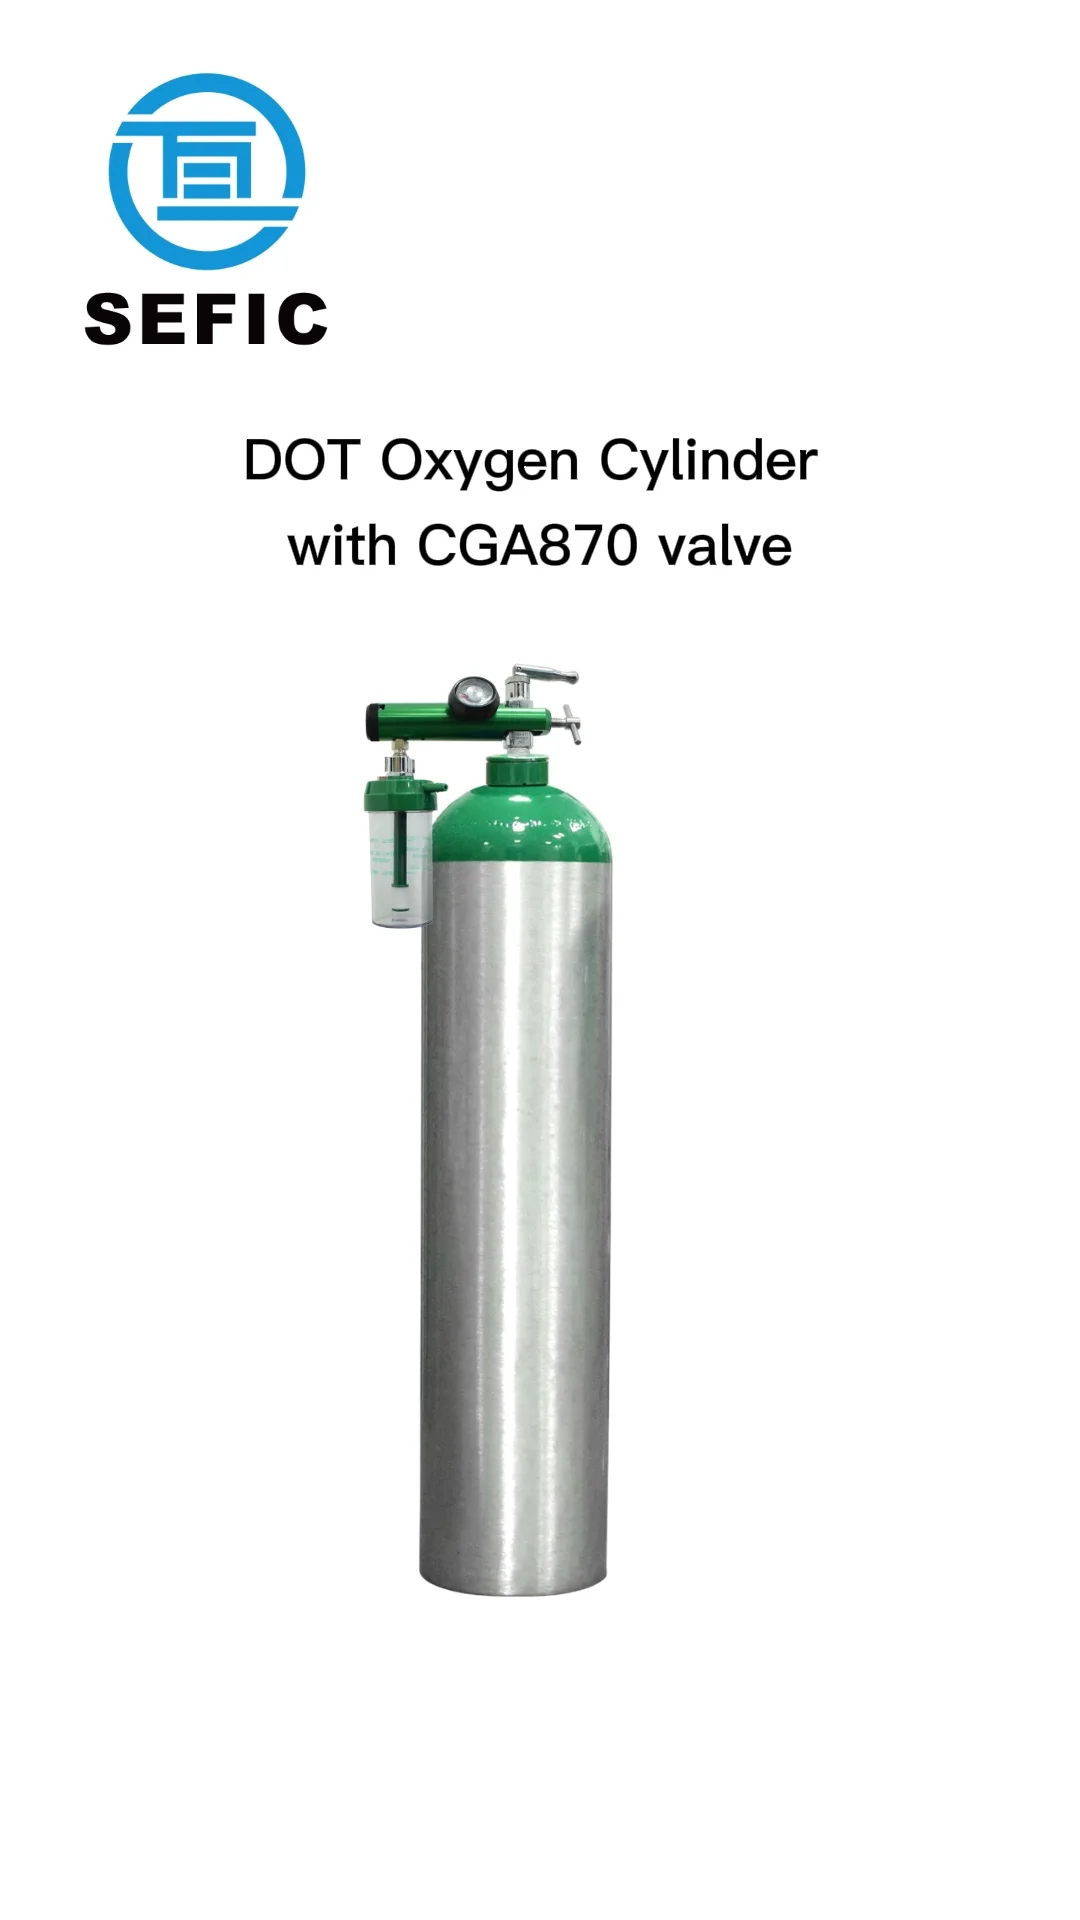 Aluminum Oxygen Cylinder With Cga870 Valve Dot Standard 2015psi 2.75l ...